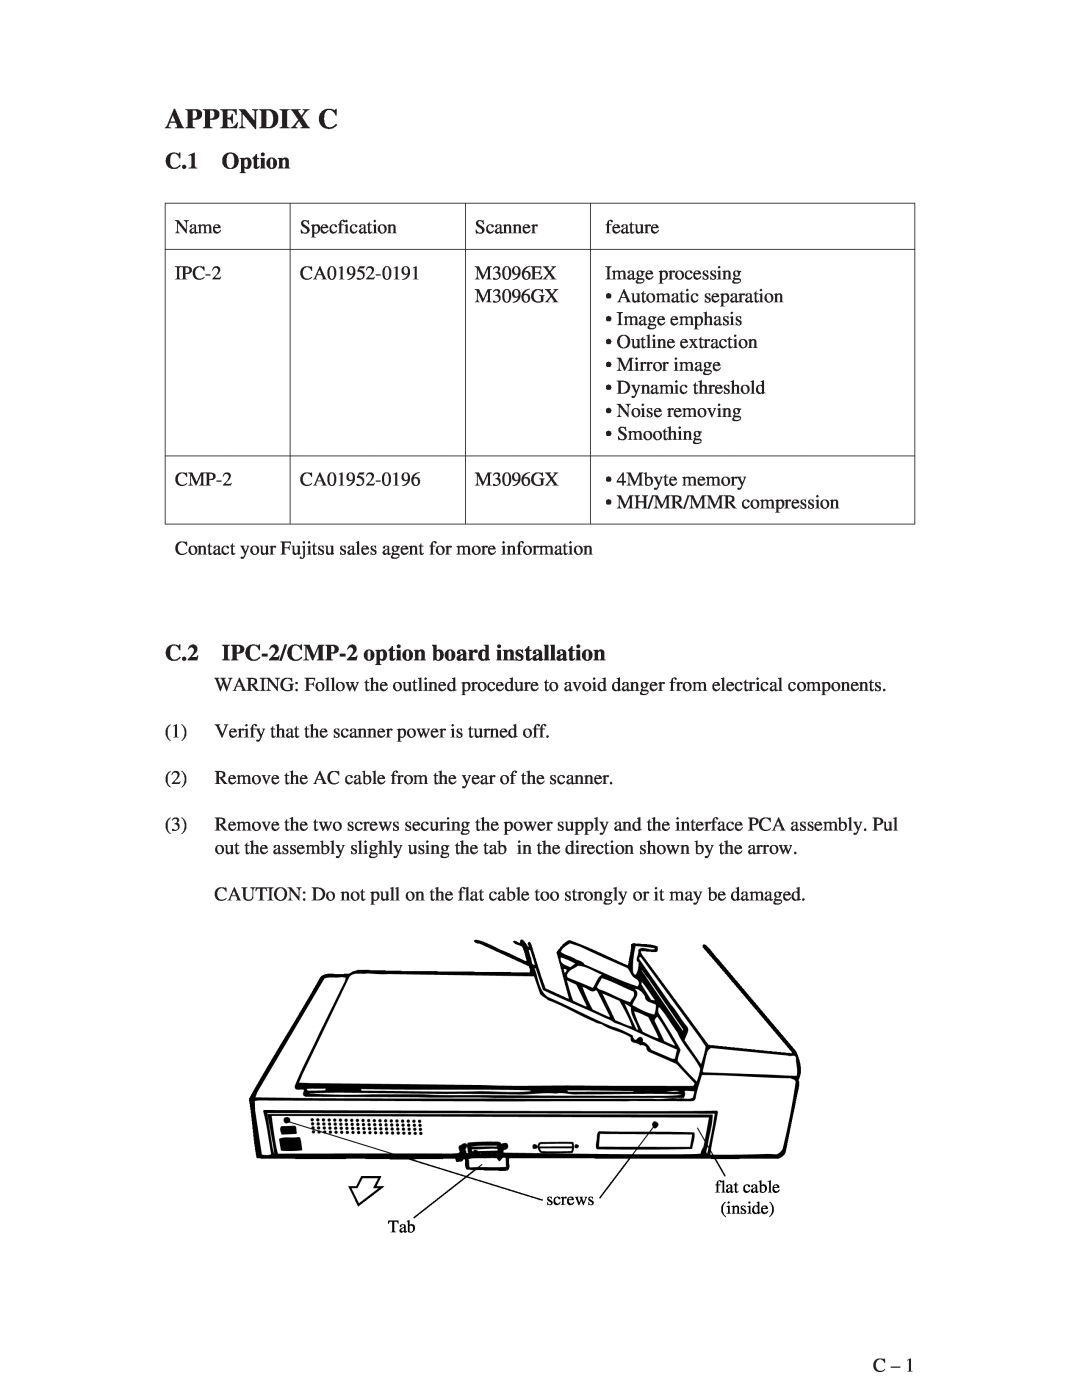 Fujitsu M3096EX, M3096GX manual Appendix C, C.1 Option, C.2 IPC-2/CMP-2 option board installation 